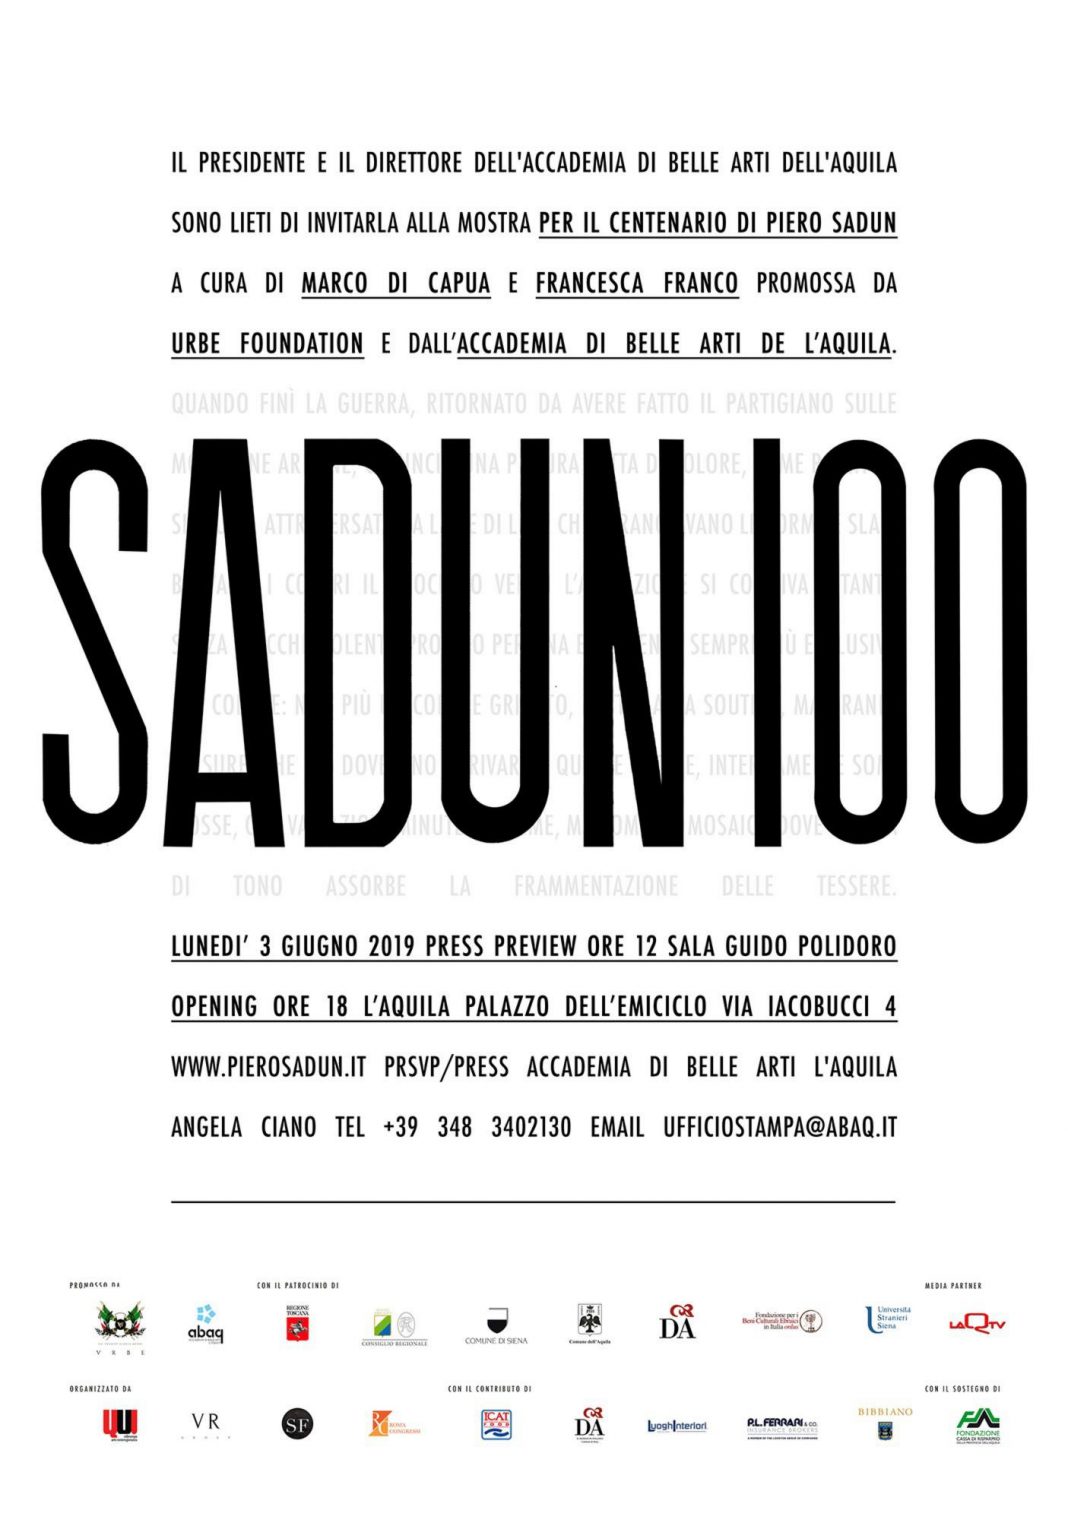 Sadun100https://www.exibart.com/repository/media/eventi/2019/05/sadun100-1-1068x1526.jpg